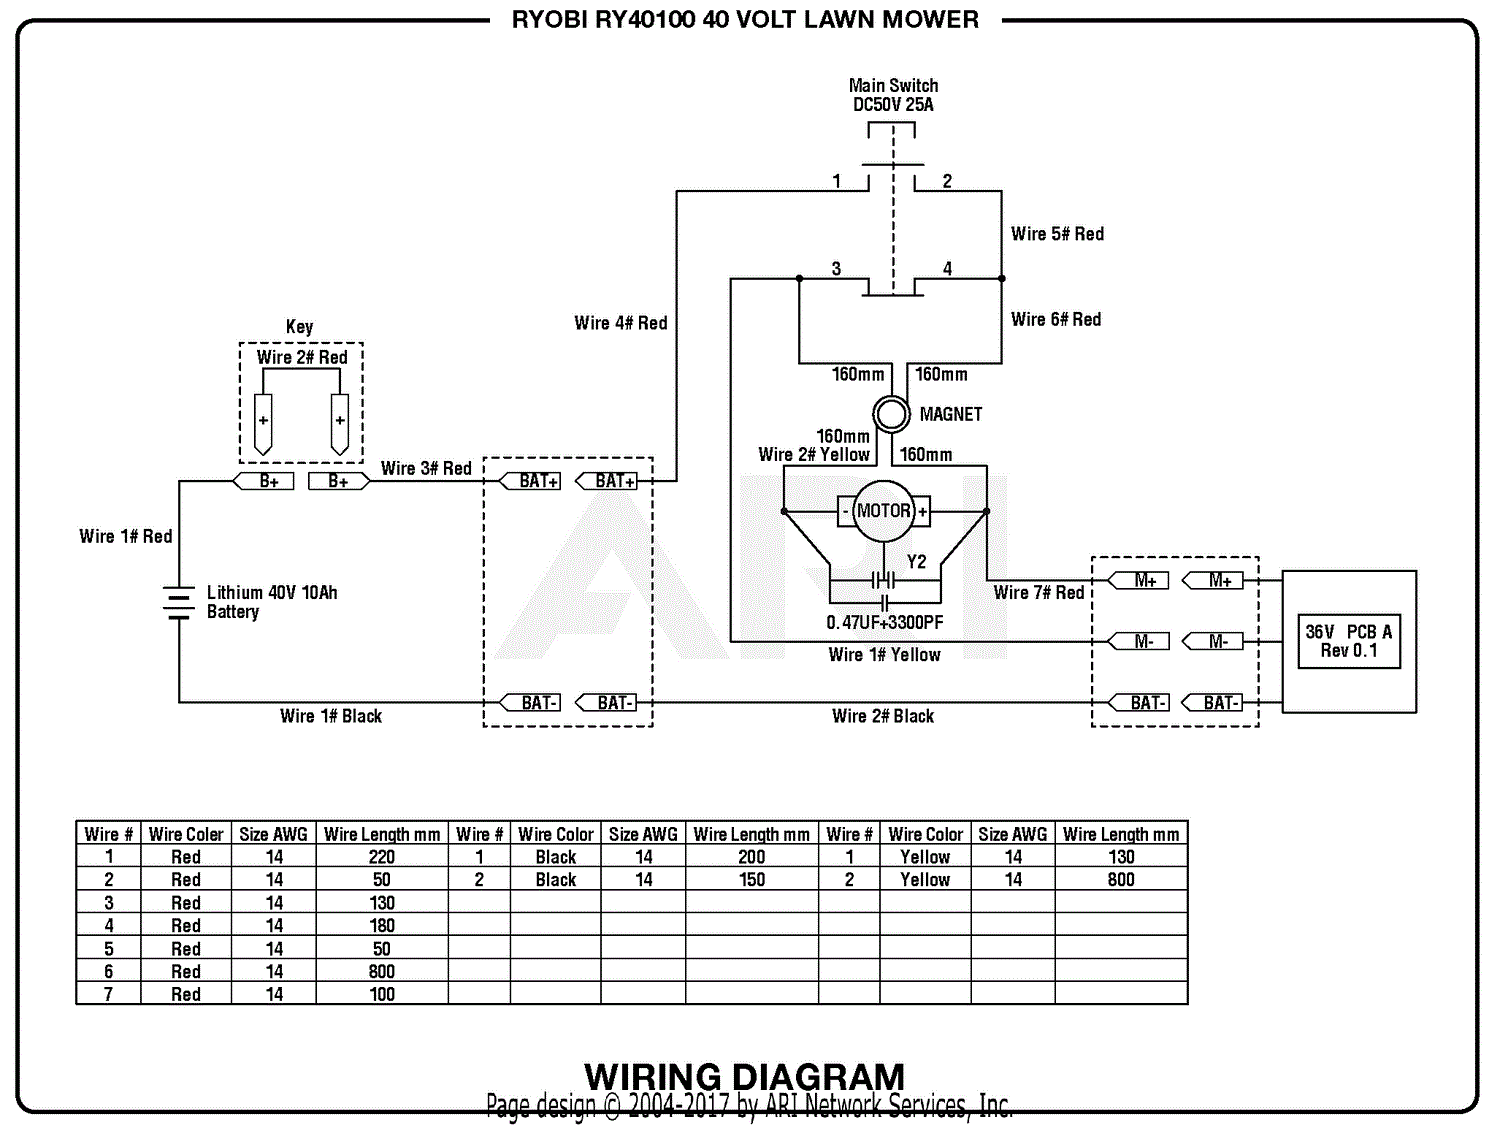 Homelite Ry40100 40 Volt Lawn Mower Parts Diagram For